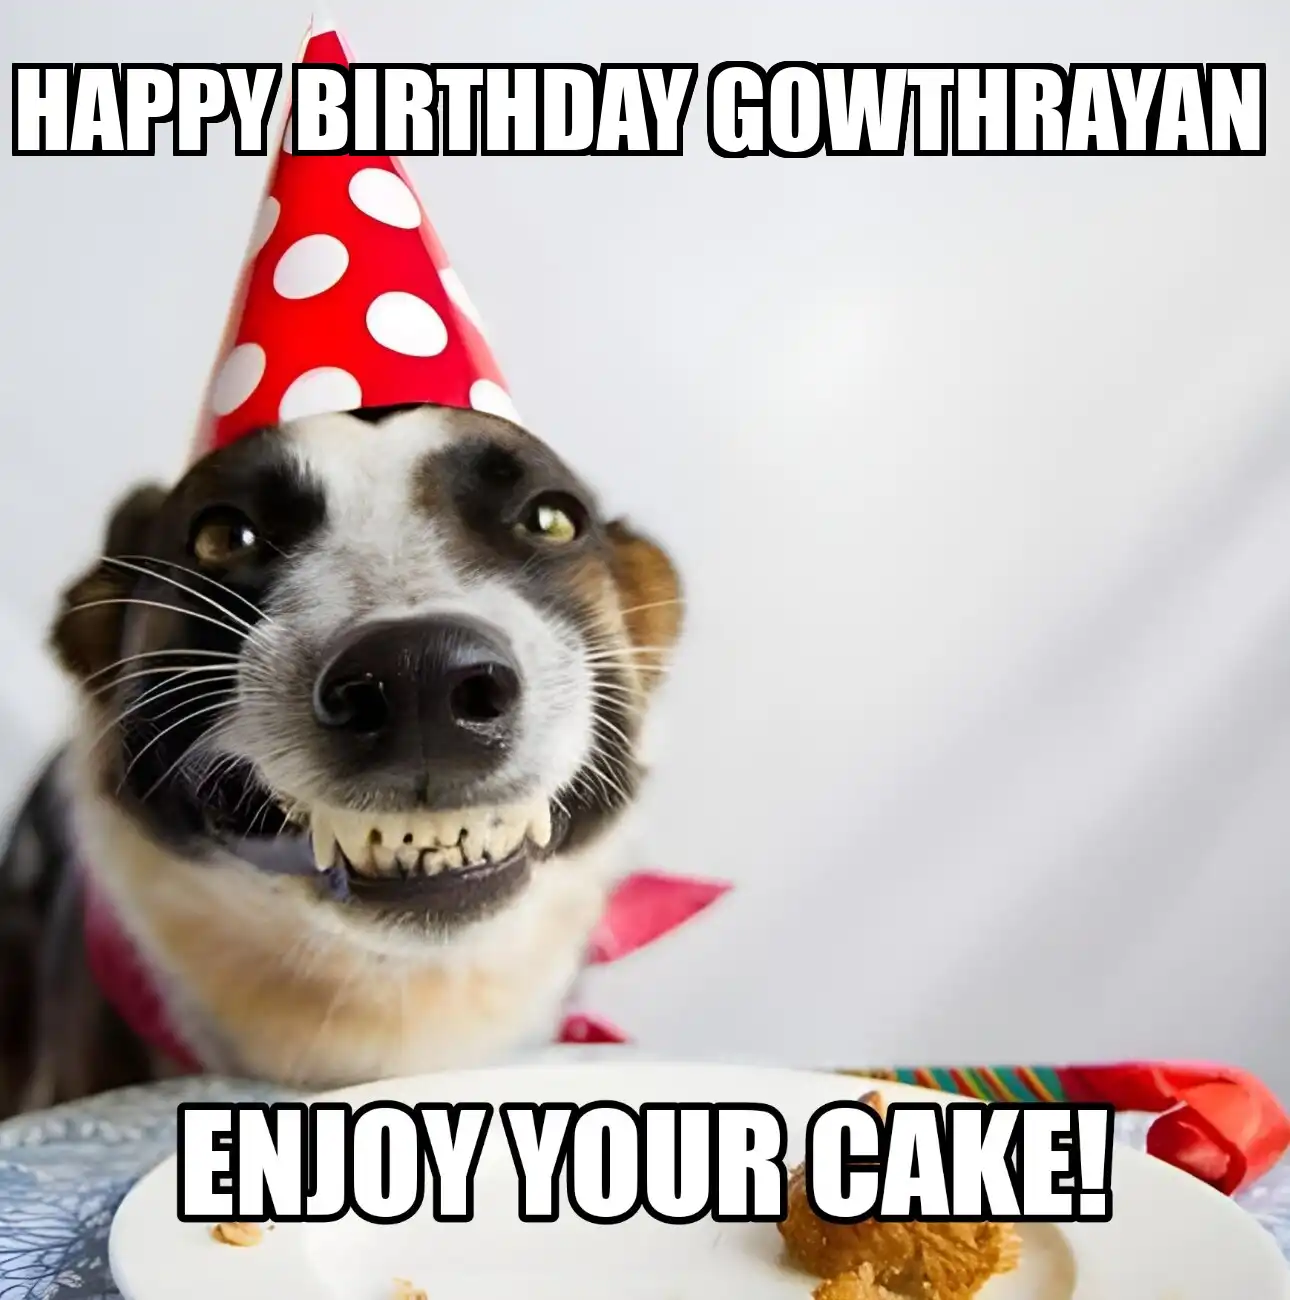 Happy Birthday Gowthrayan Enjoy Your Cake Dog Meme